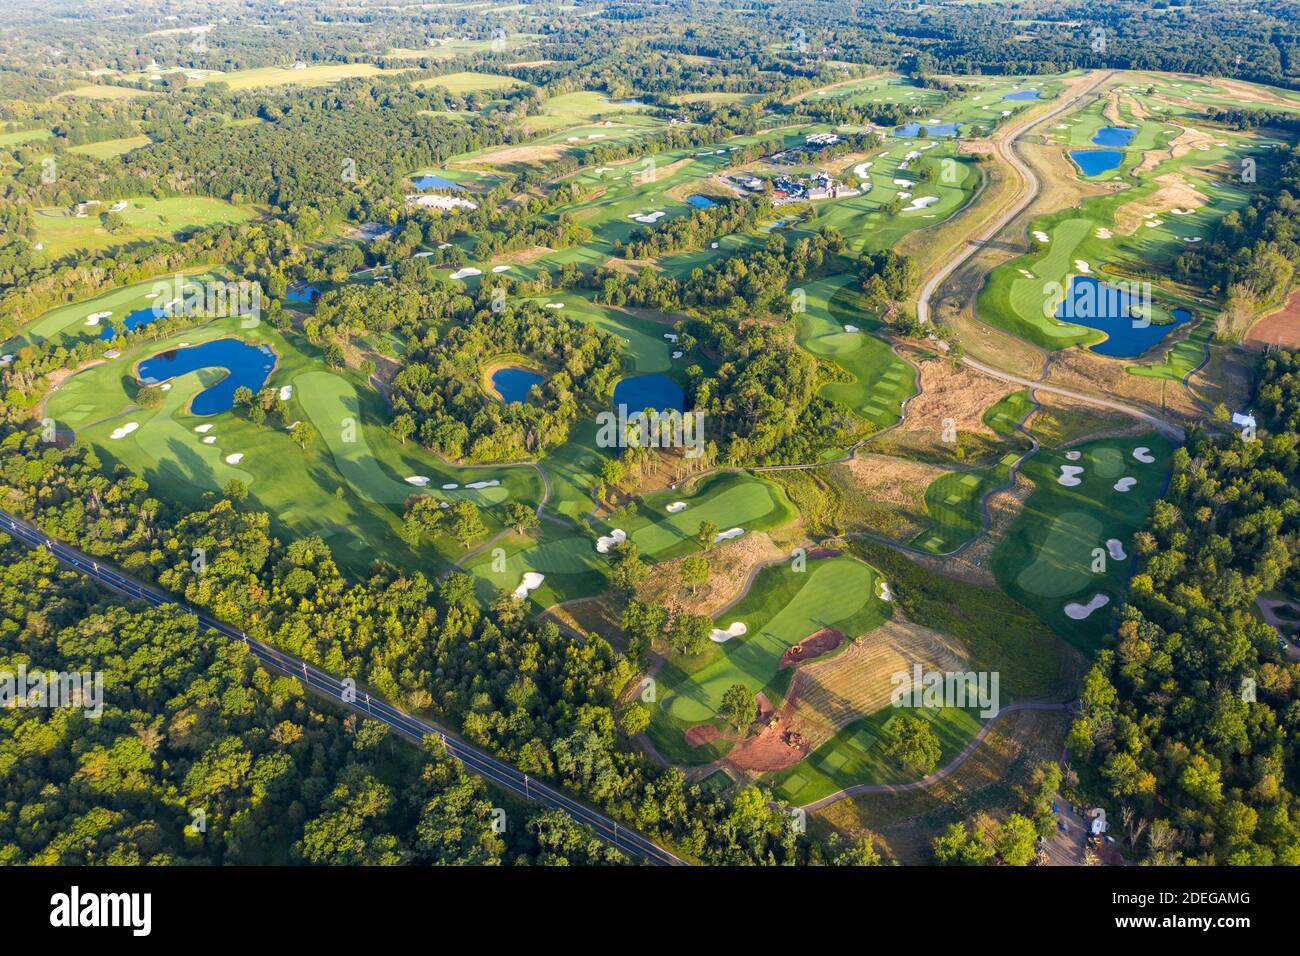 Parcours de golf national de Trump, Bedminster, New Jersey Banque D'Images